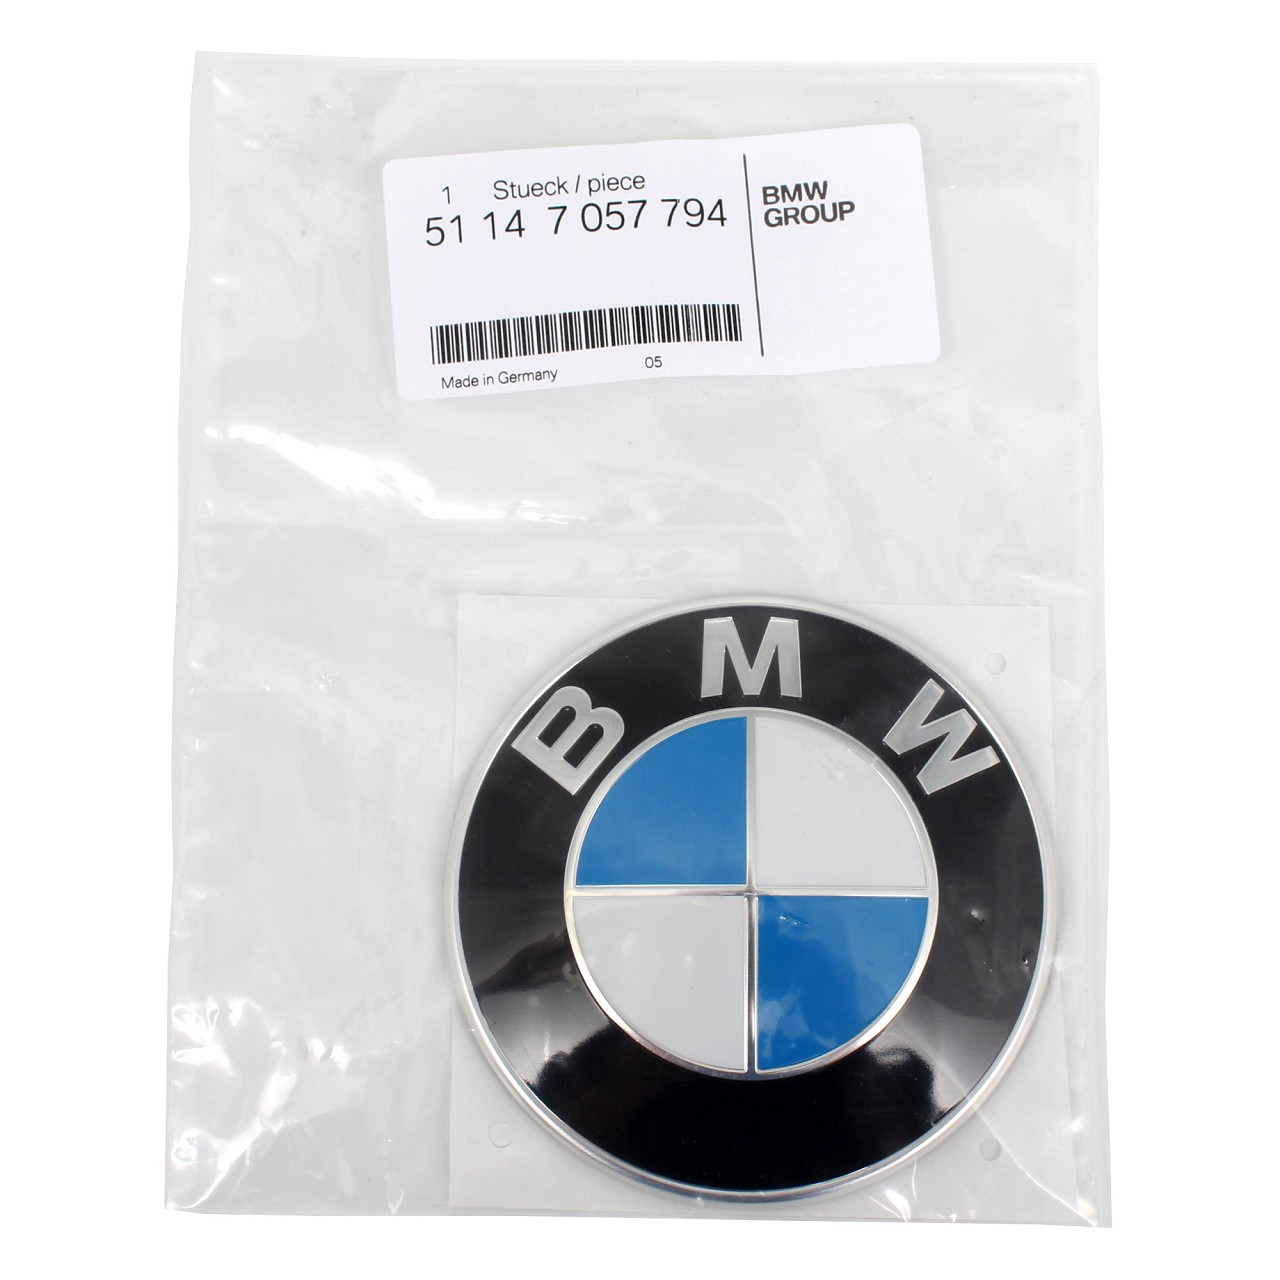 ORIGINAL BMW Emblem Logo Motorhaube Heckklappe Ø 82 mm 51148132375 + Tülle